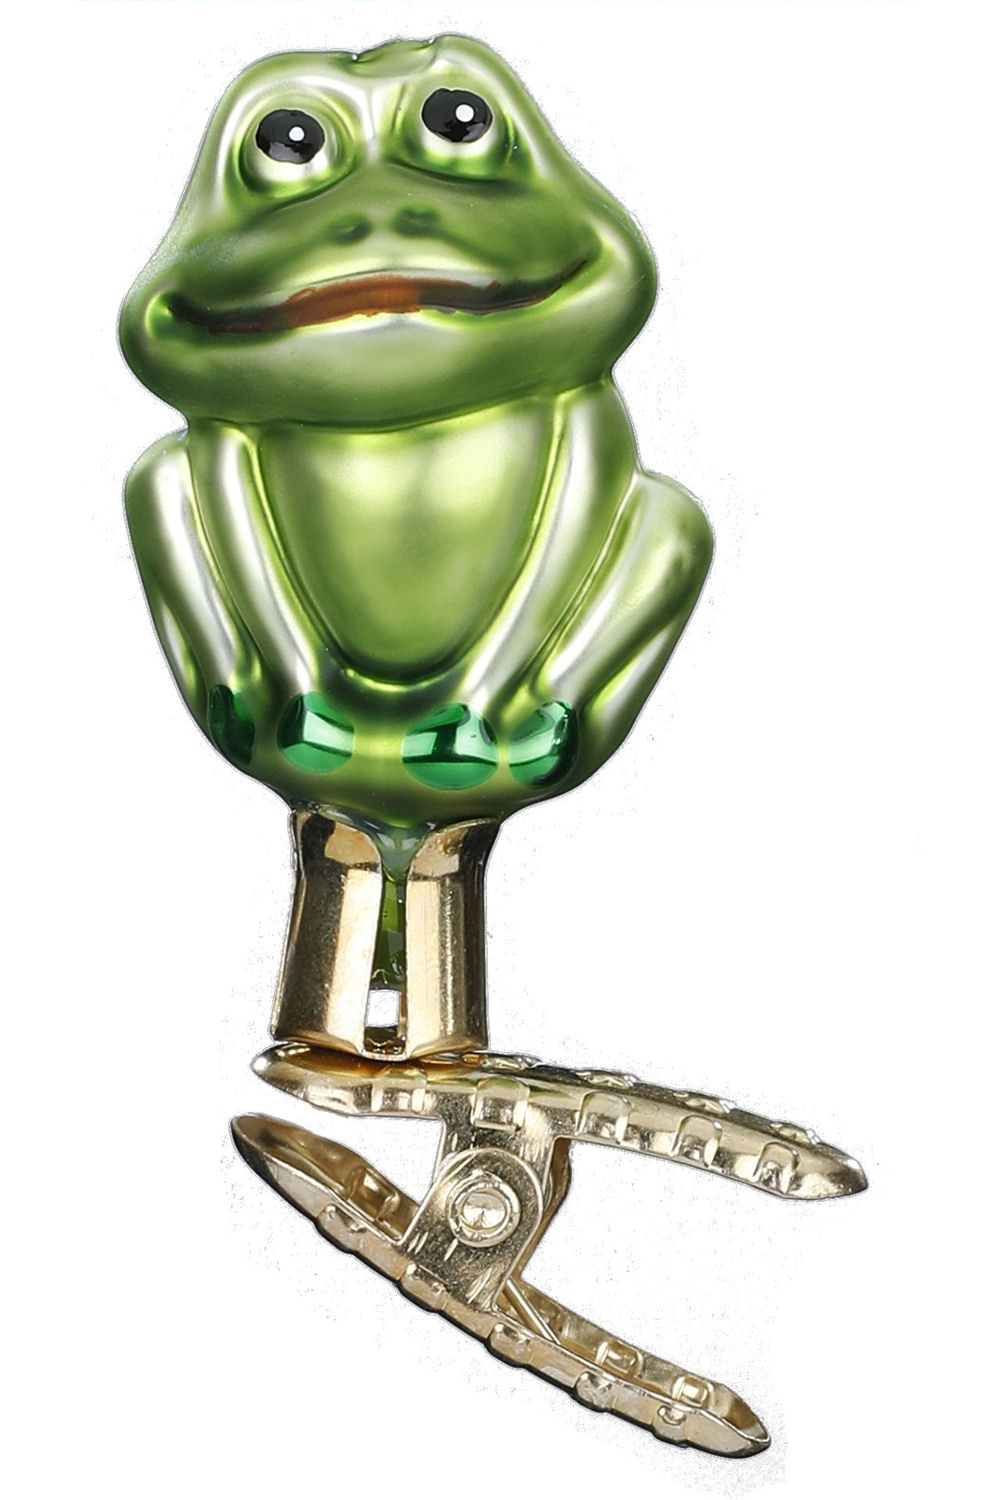 Mini Frog